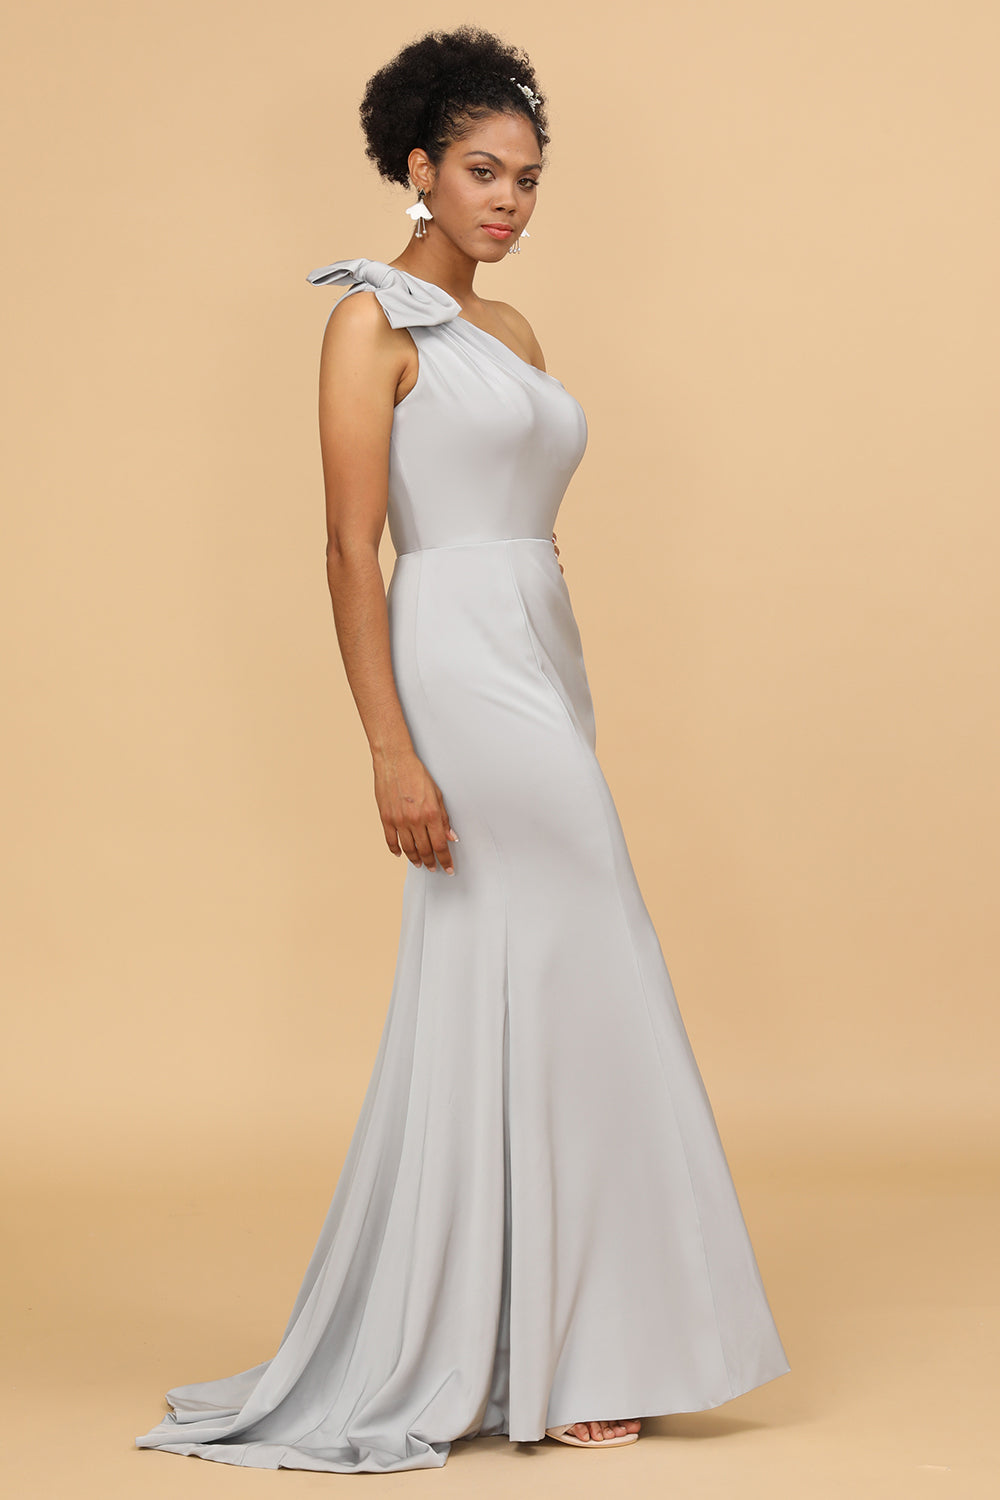 Grey One-shoulder Mermaid Satin Bridesmaid Dress